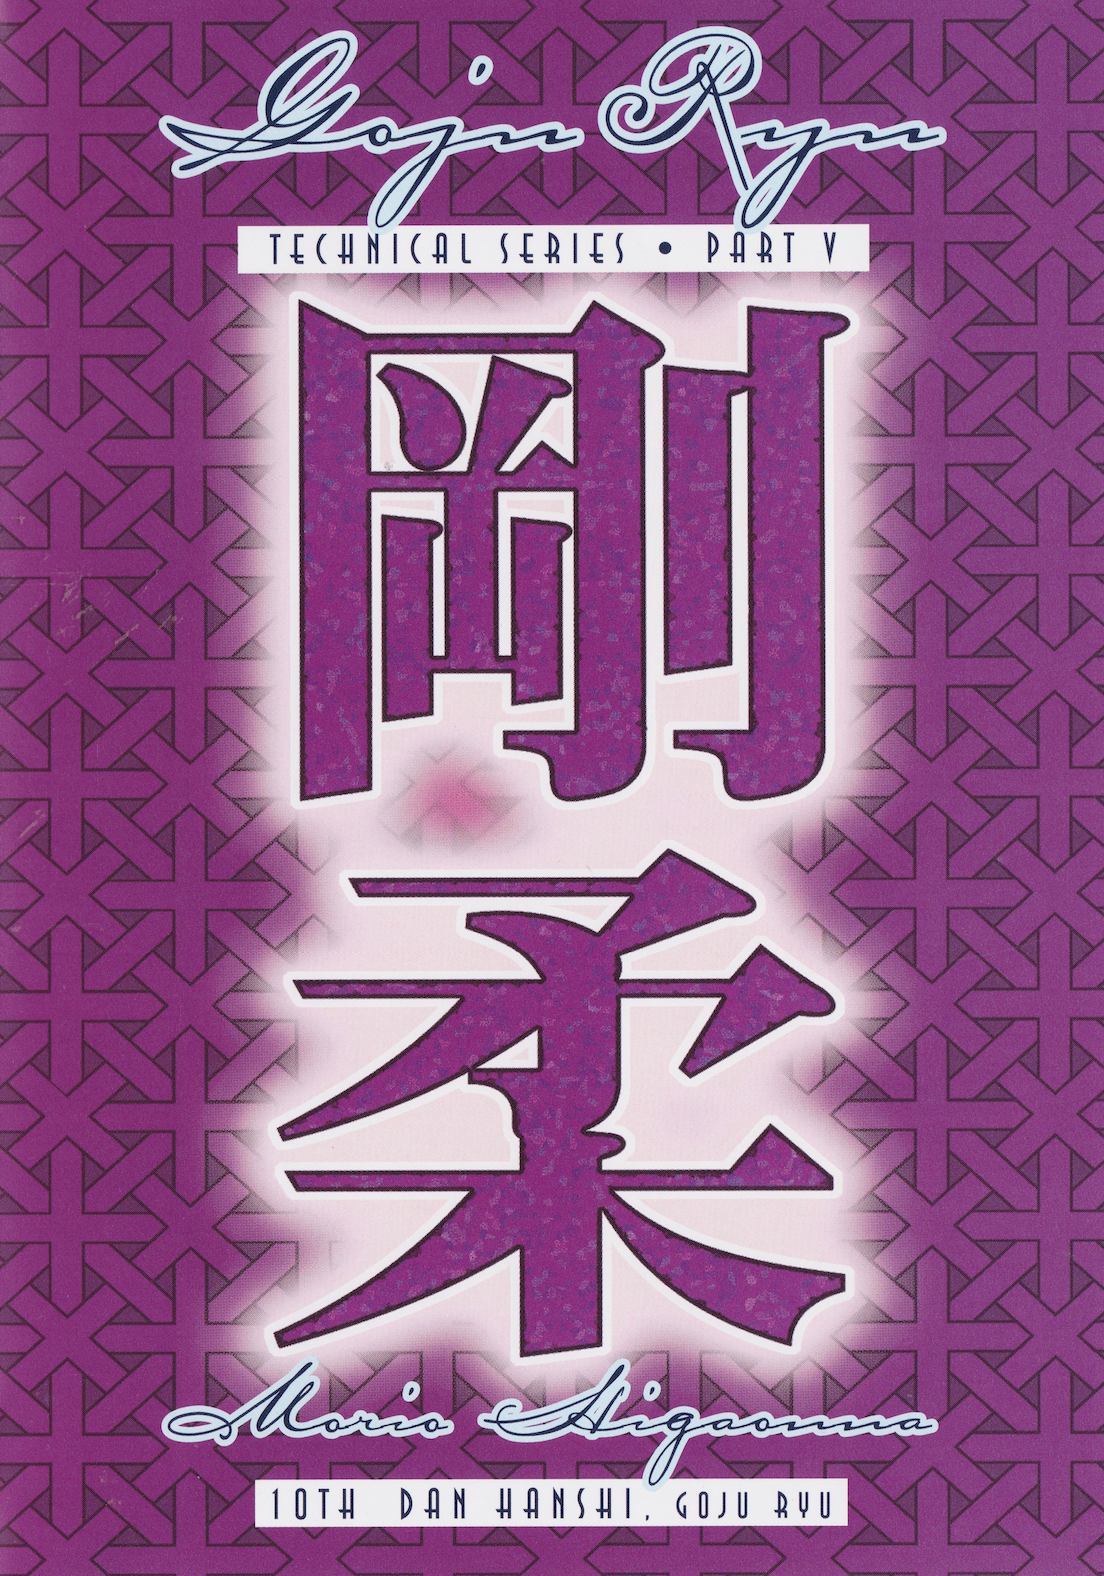 Goju Ryu Technical Series Part 5 DVD by Morio Higaonna - Budovideos Inc